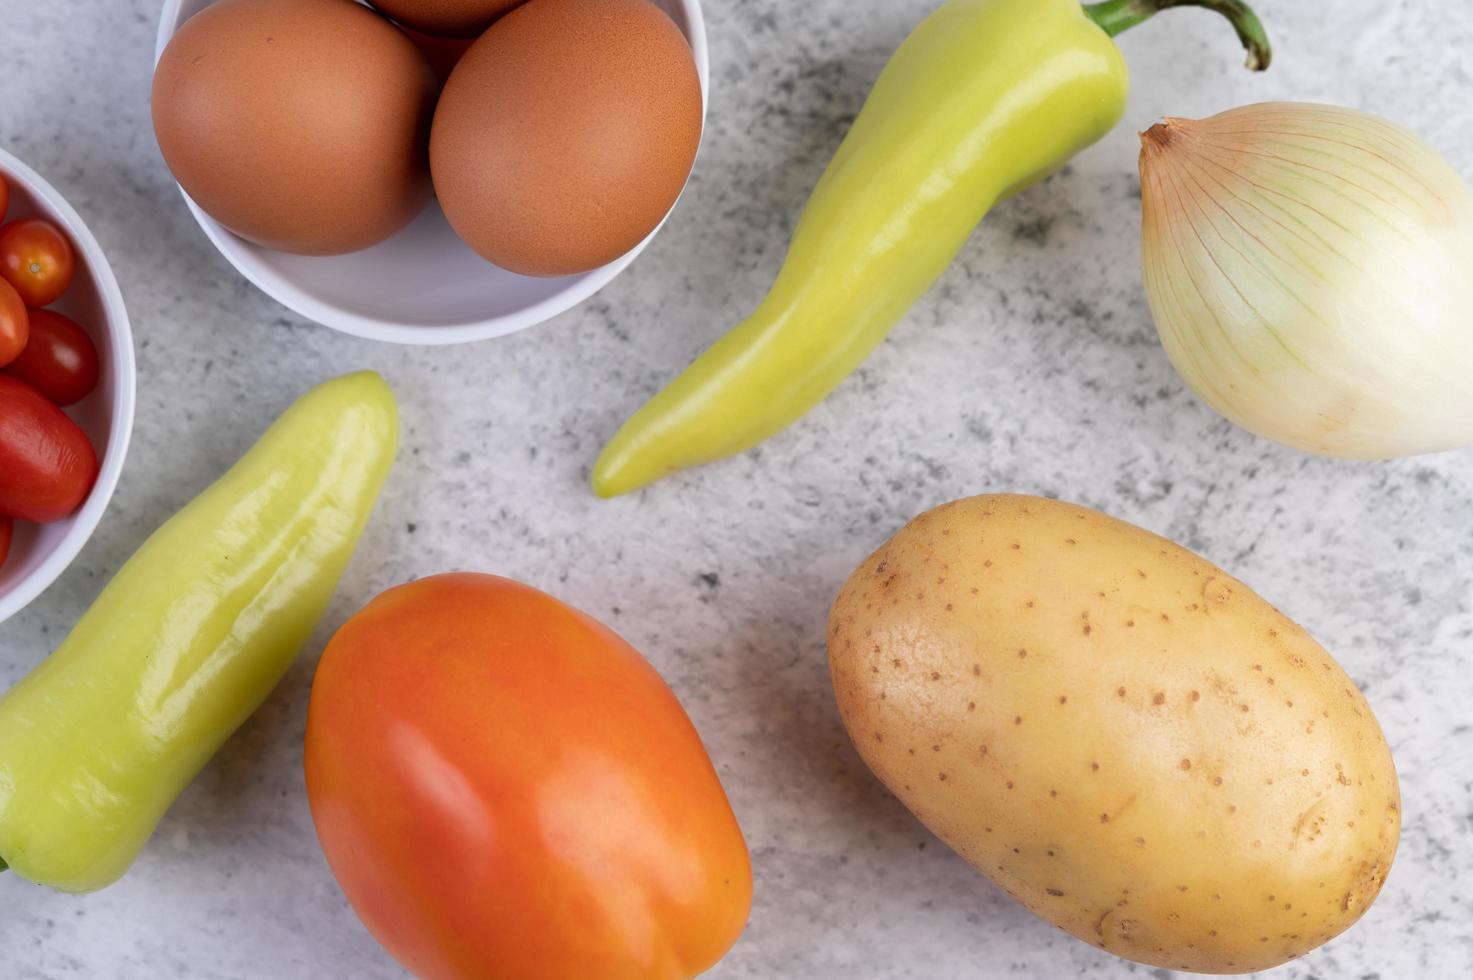 aardappelen, tomaten, paprika, uien en eieren foto